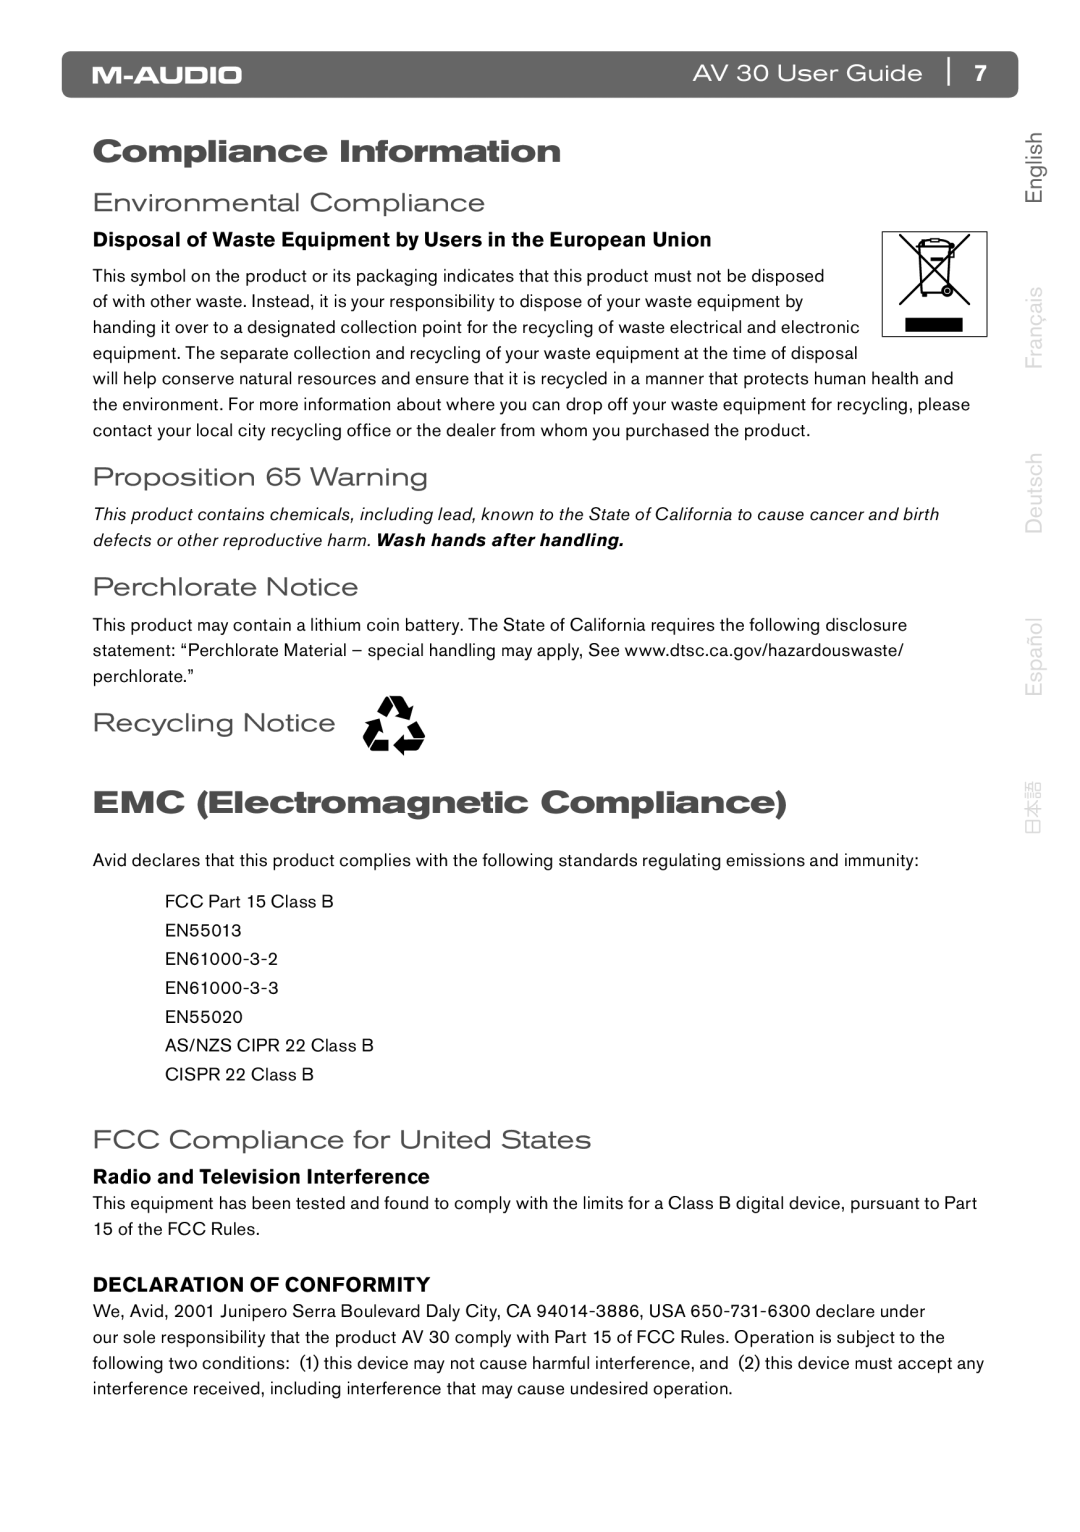 M-Audio AV 30 Compliance Information, EMC Electromagnetic Compliance, Environmental Compliance, Proposition 65 Warning 